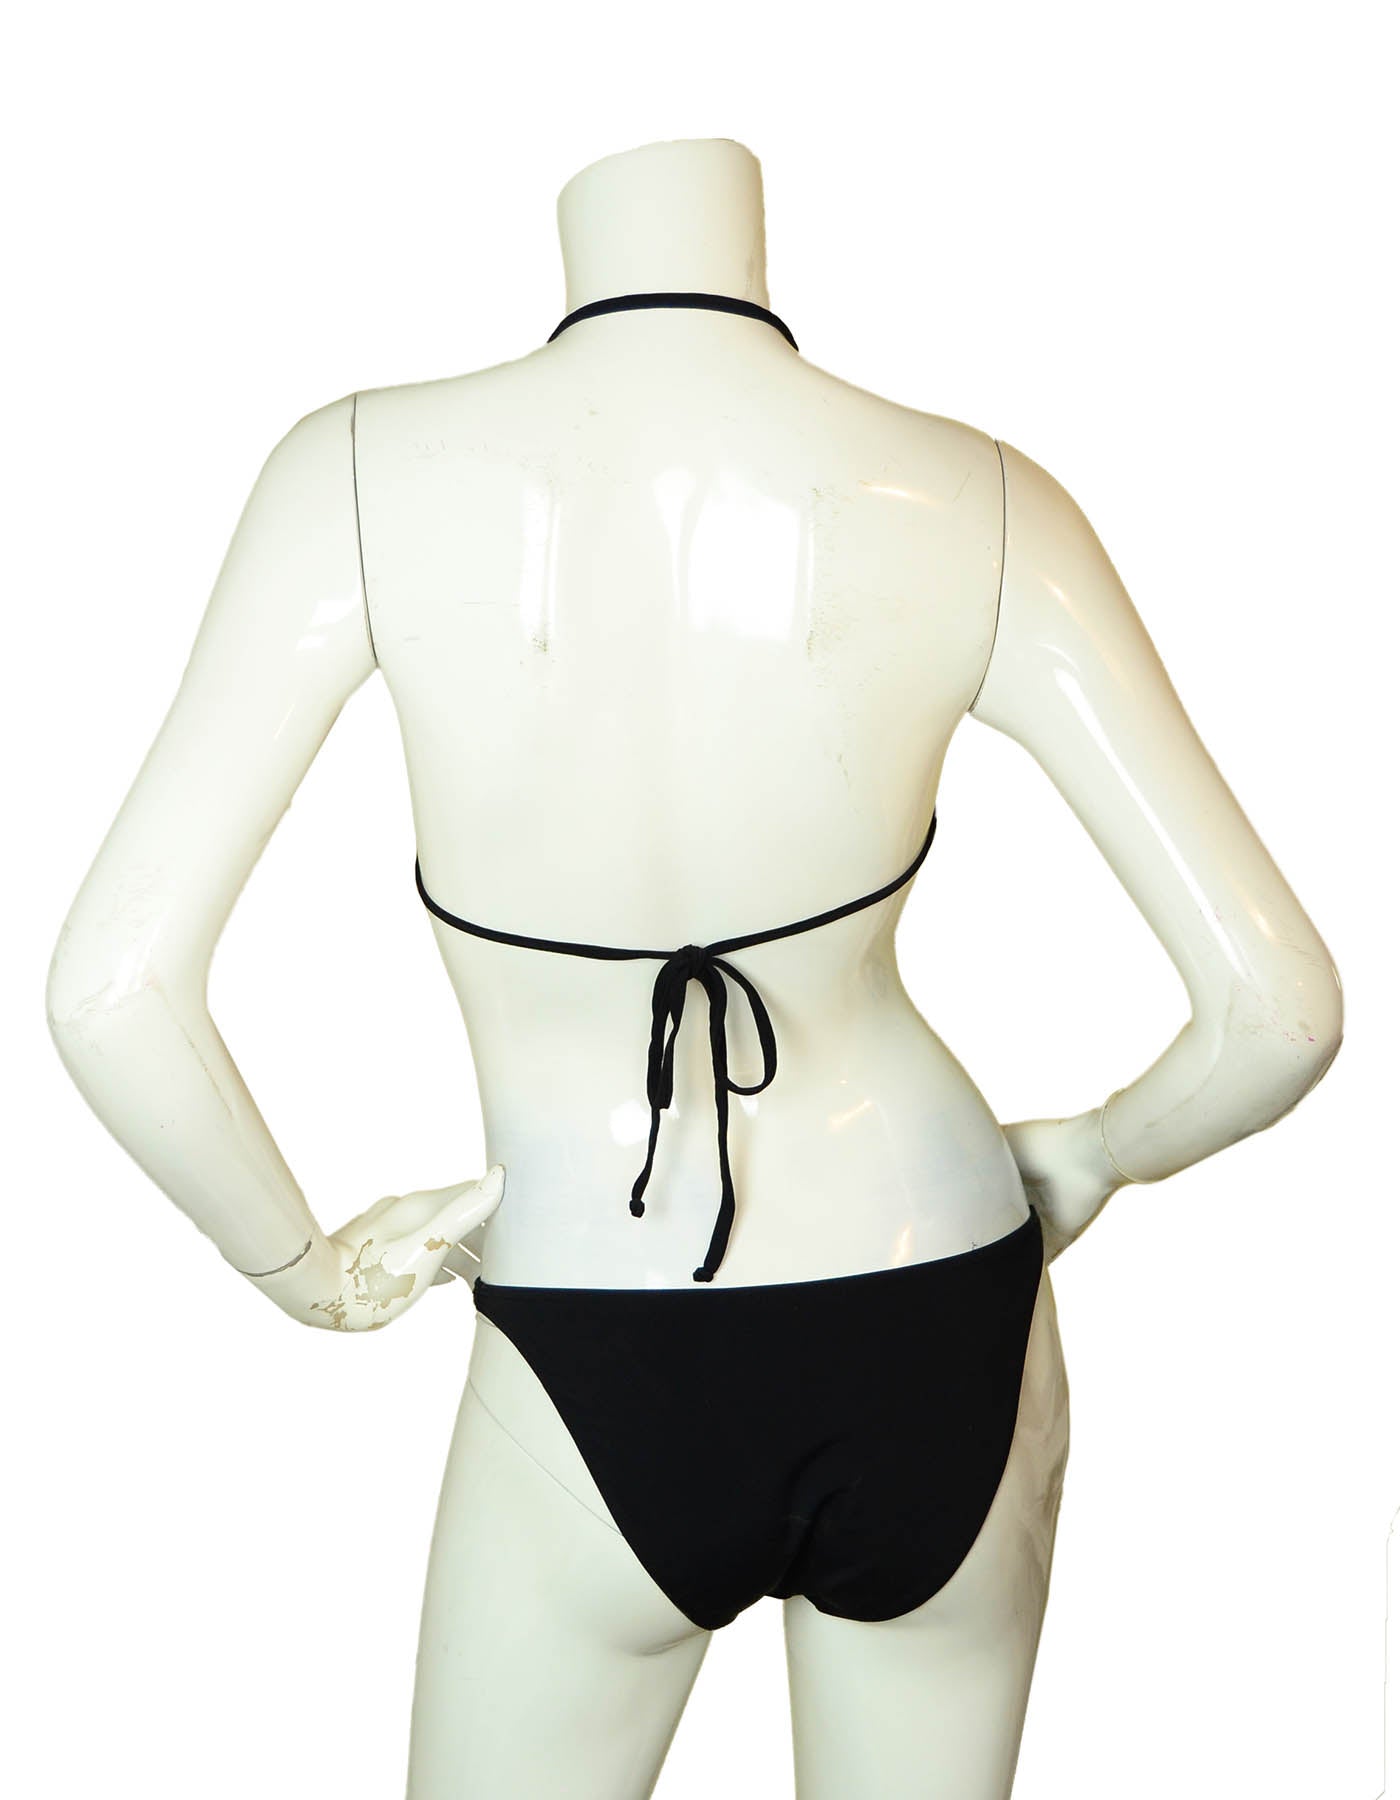 chanel swimsuit, 公認海外通販サイト